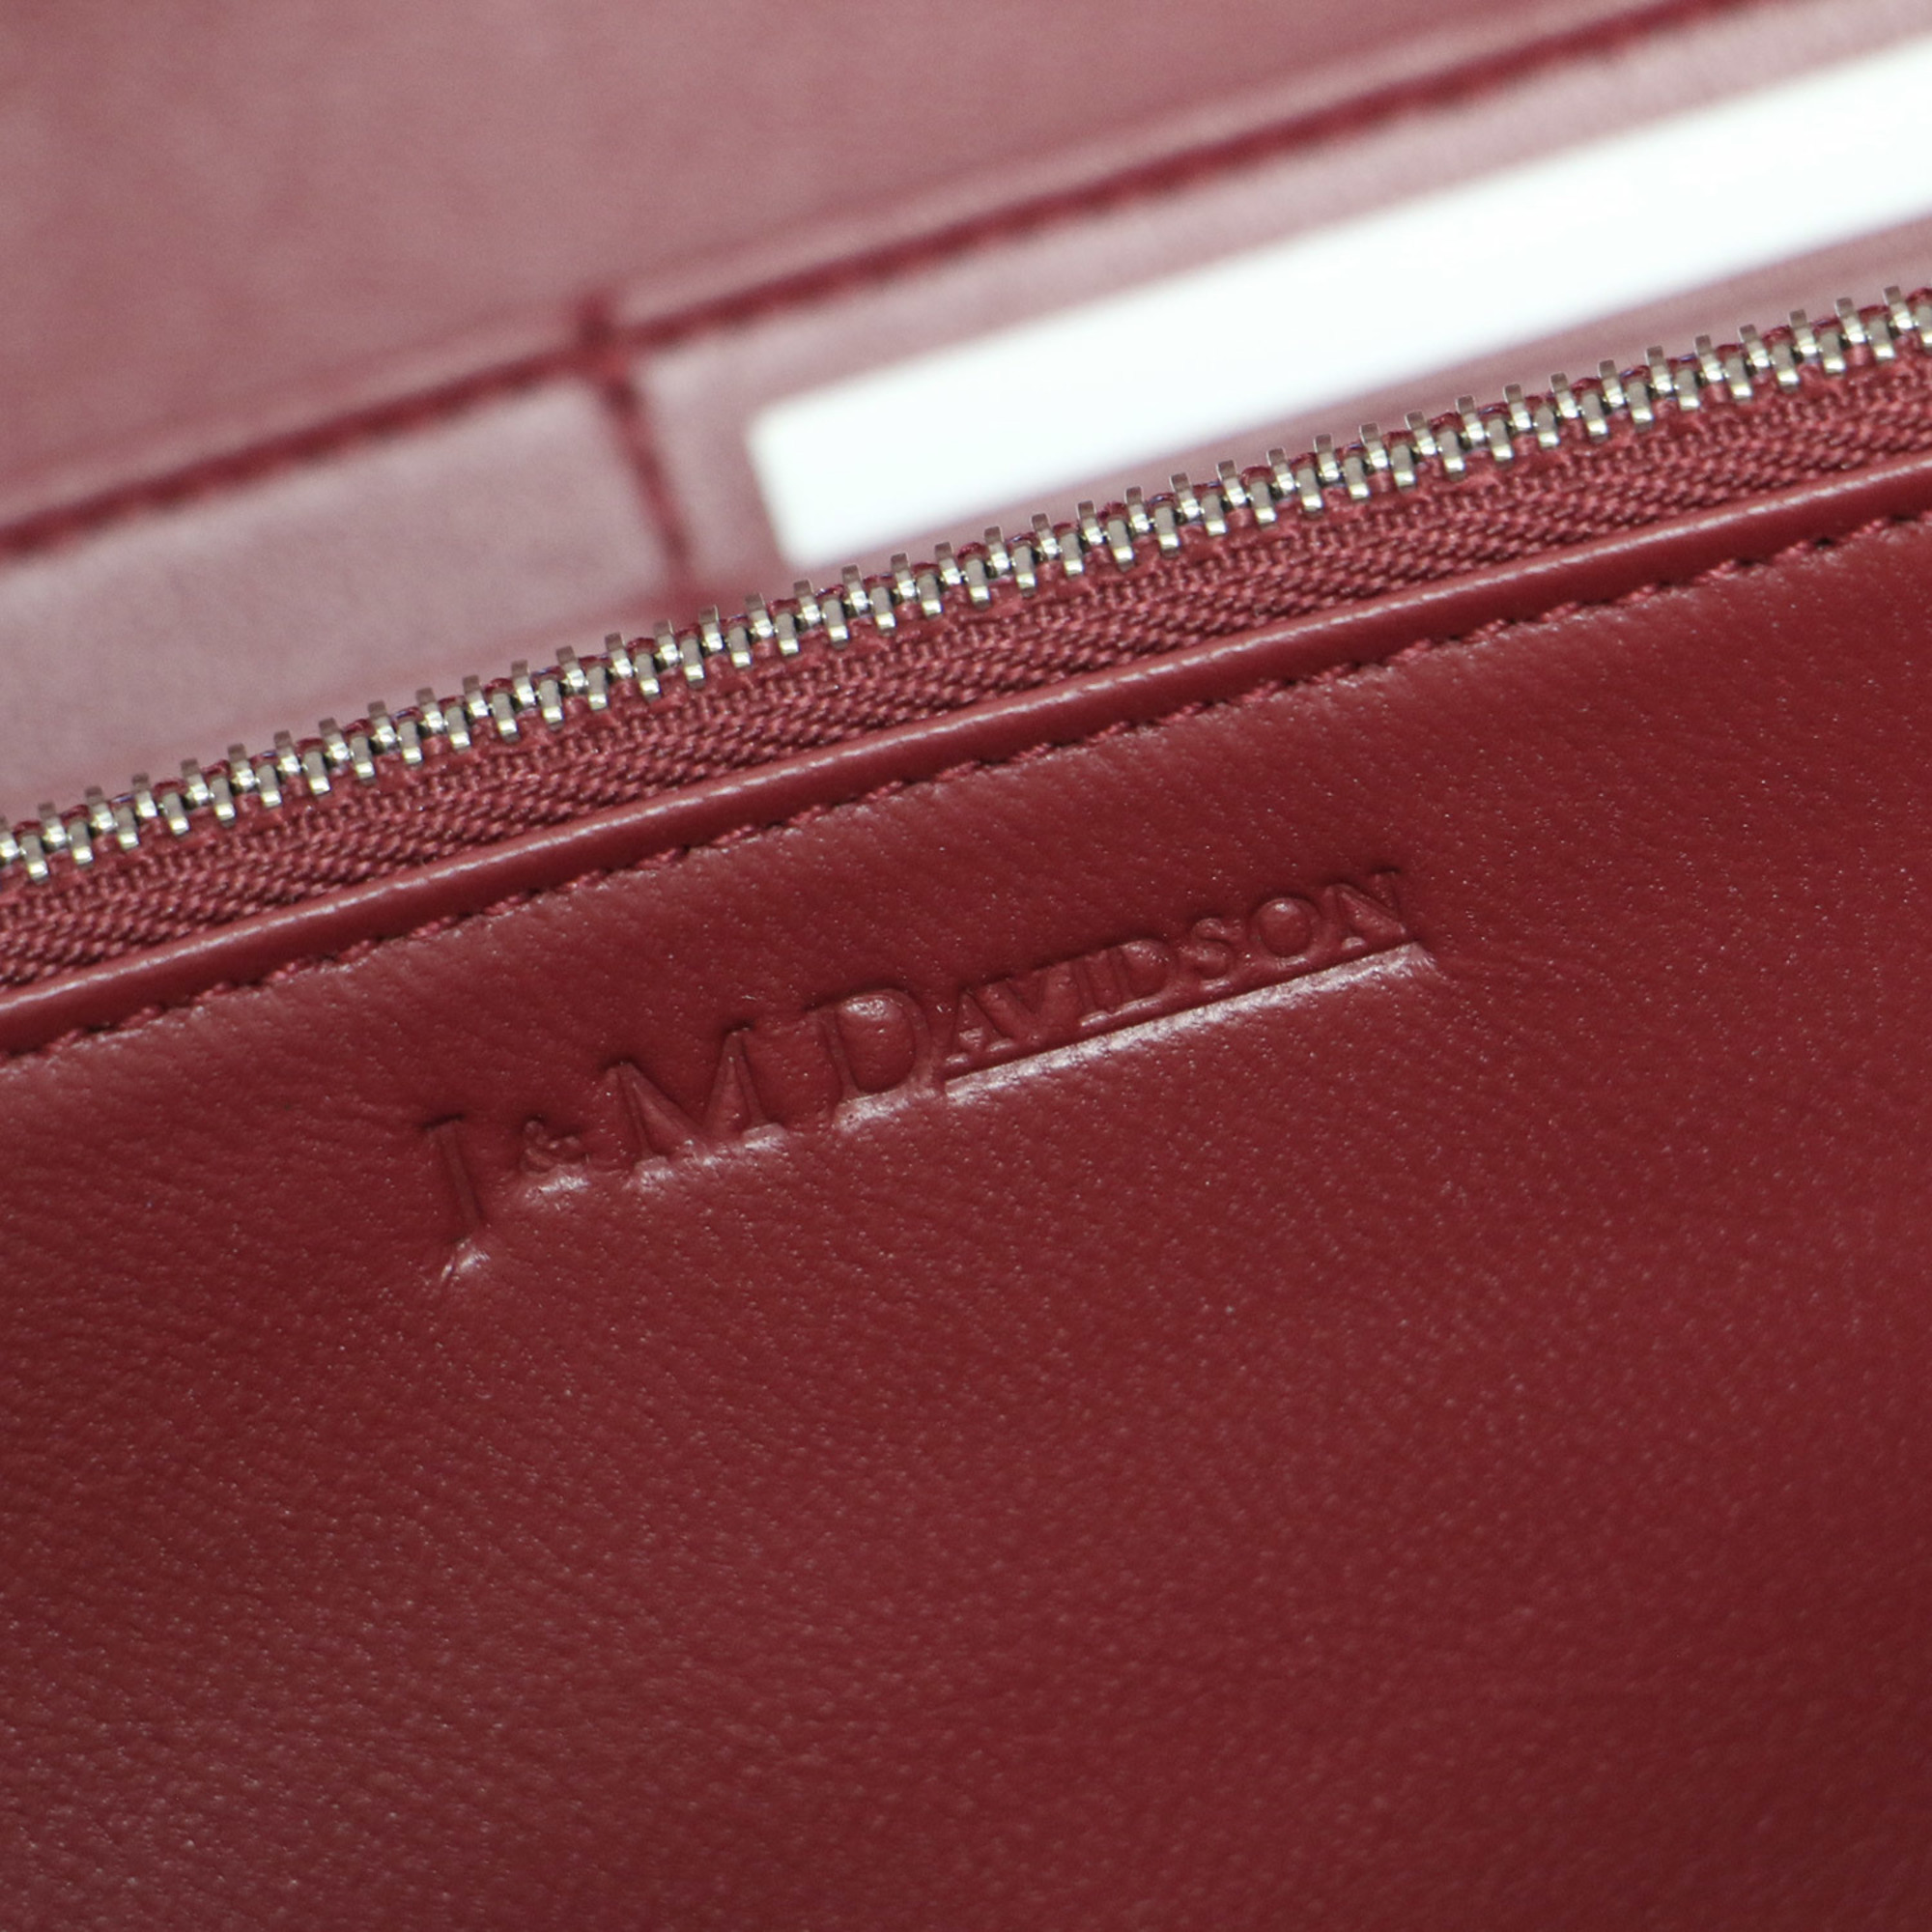 J&M DAVIDSON Davidson Wallet Long Red Bi-fold Embossed Leather 10220N Women's